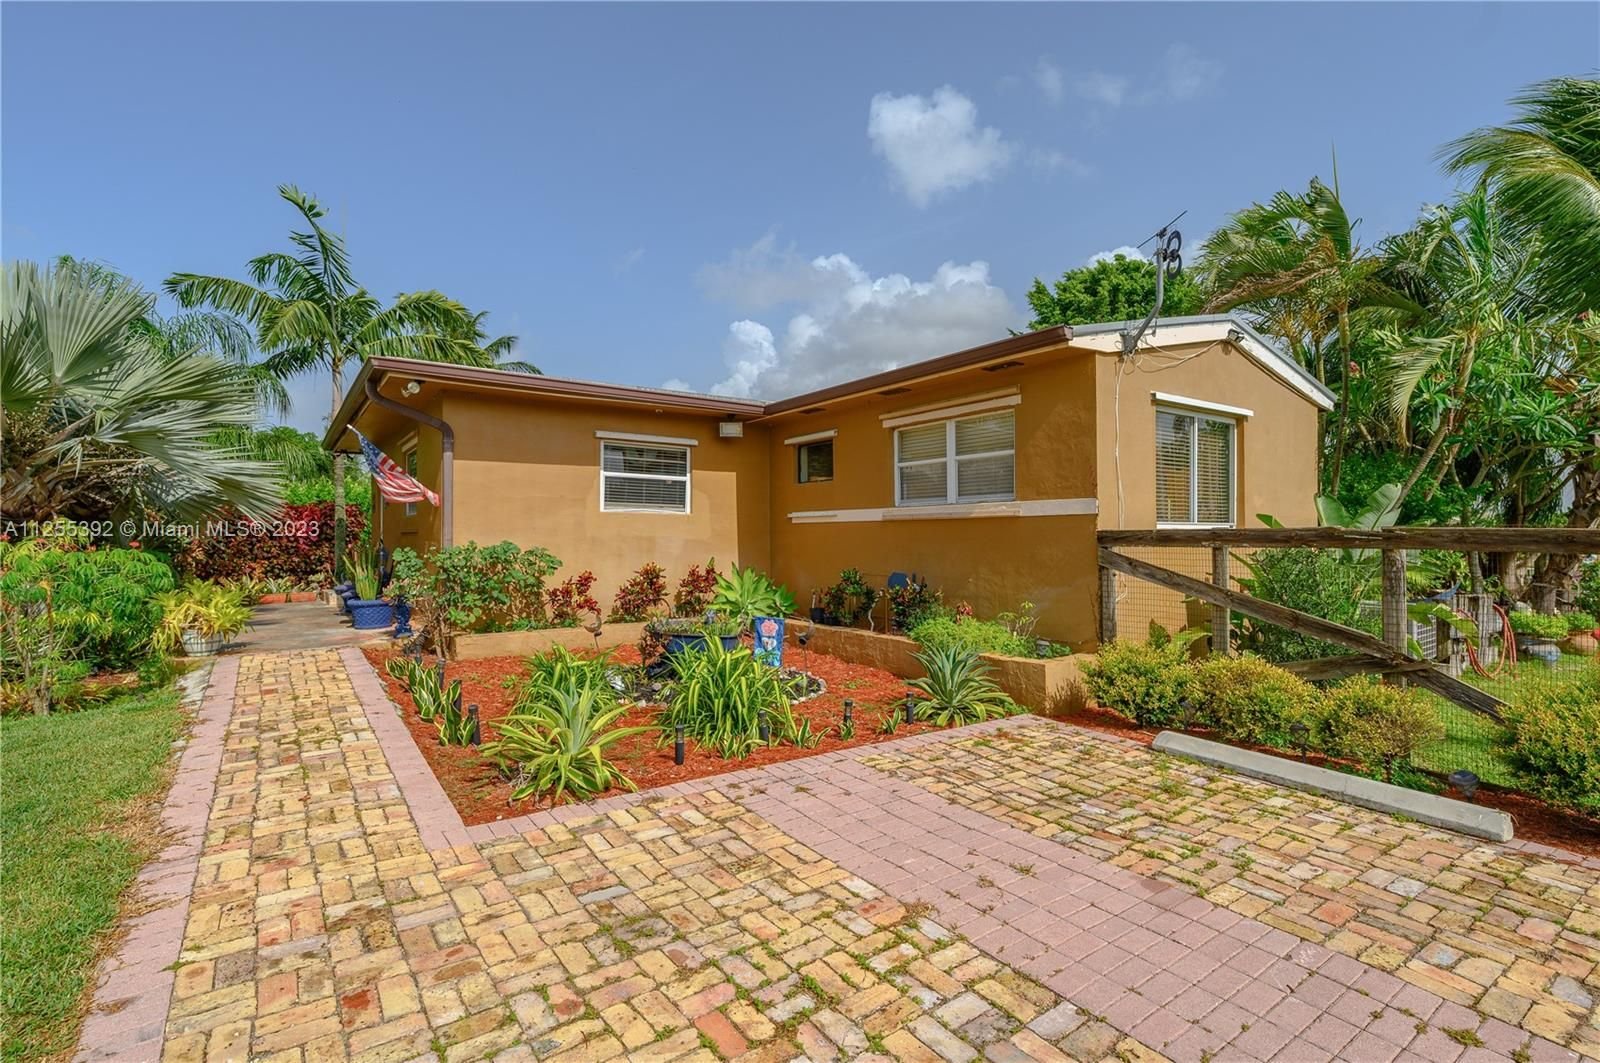 Real estate property located at 19755 208th St, Miami-Dade County, Miami, FL